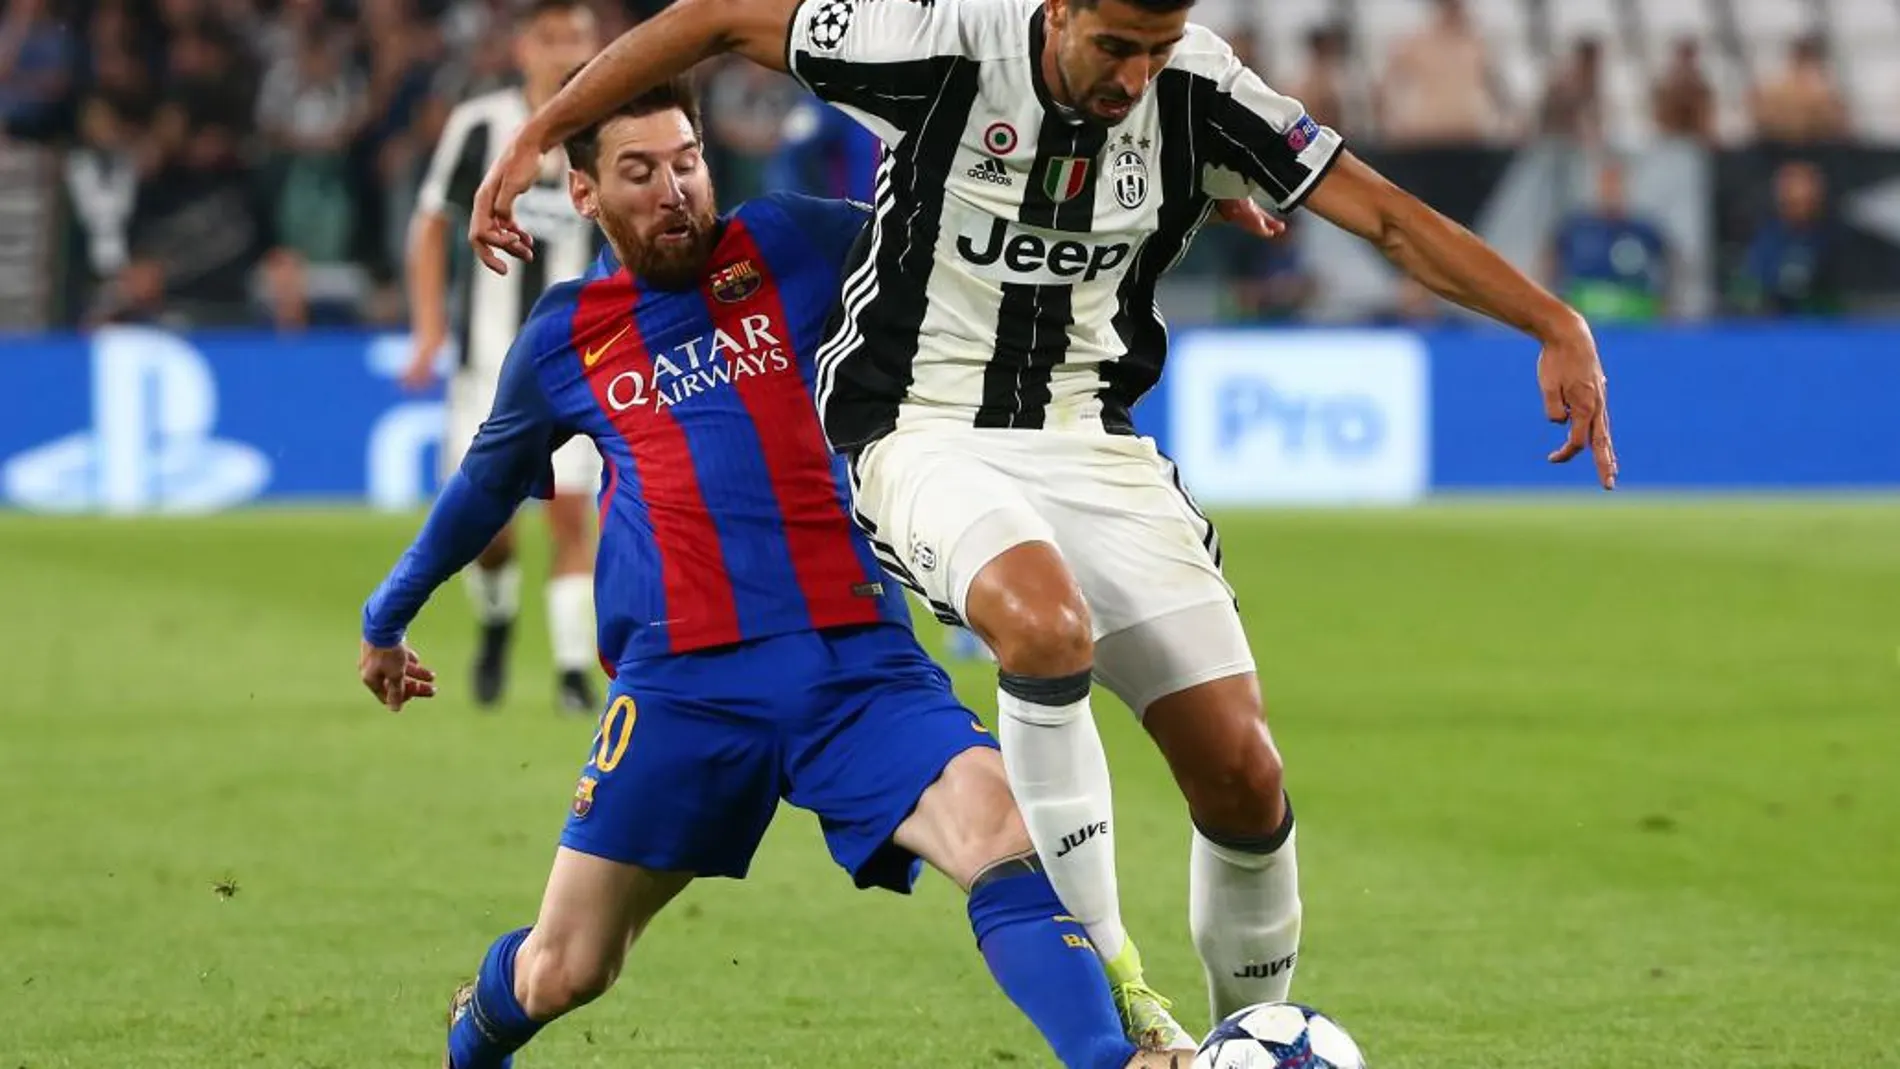 El jugador de la Juventus Sami Khedira y el del Barcelona Lionel Messi